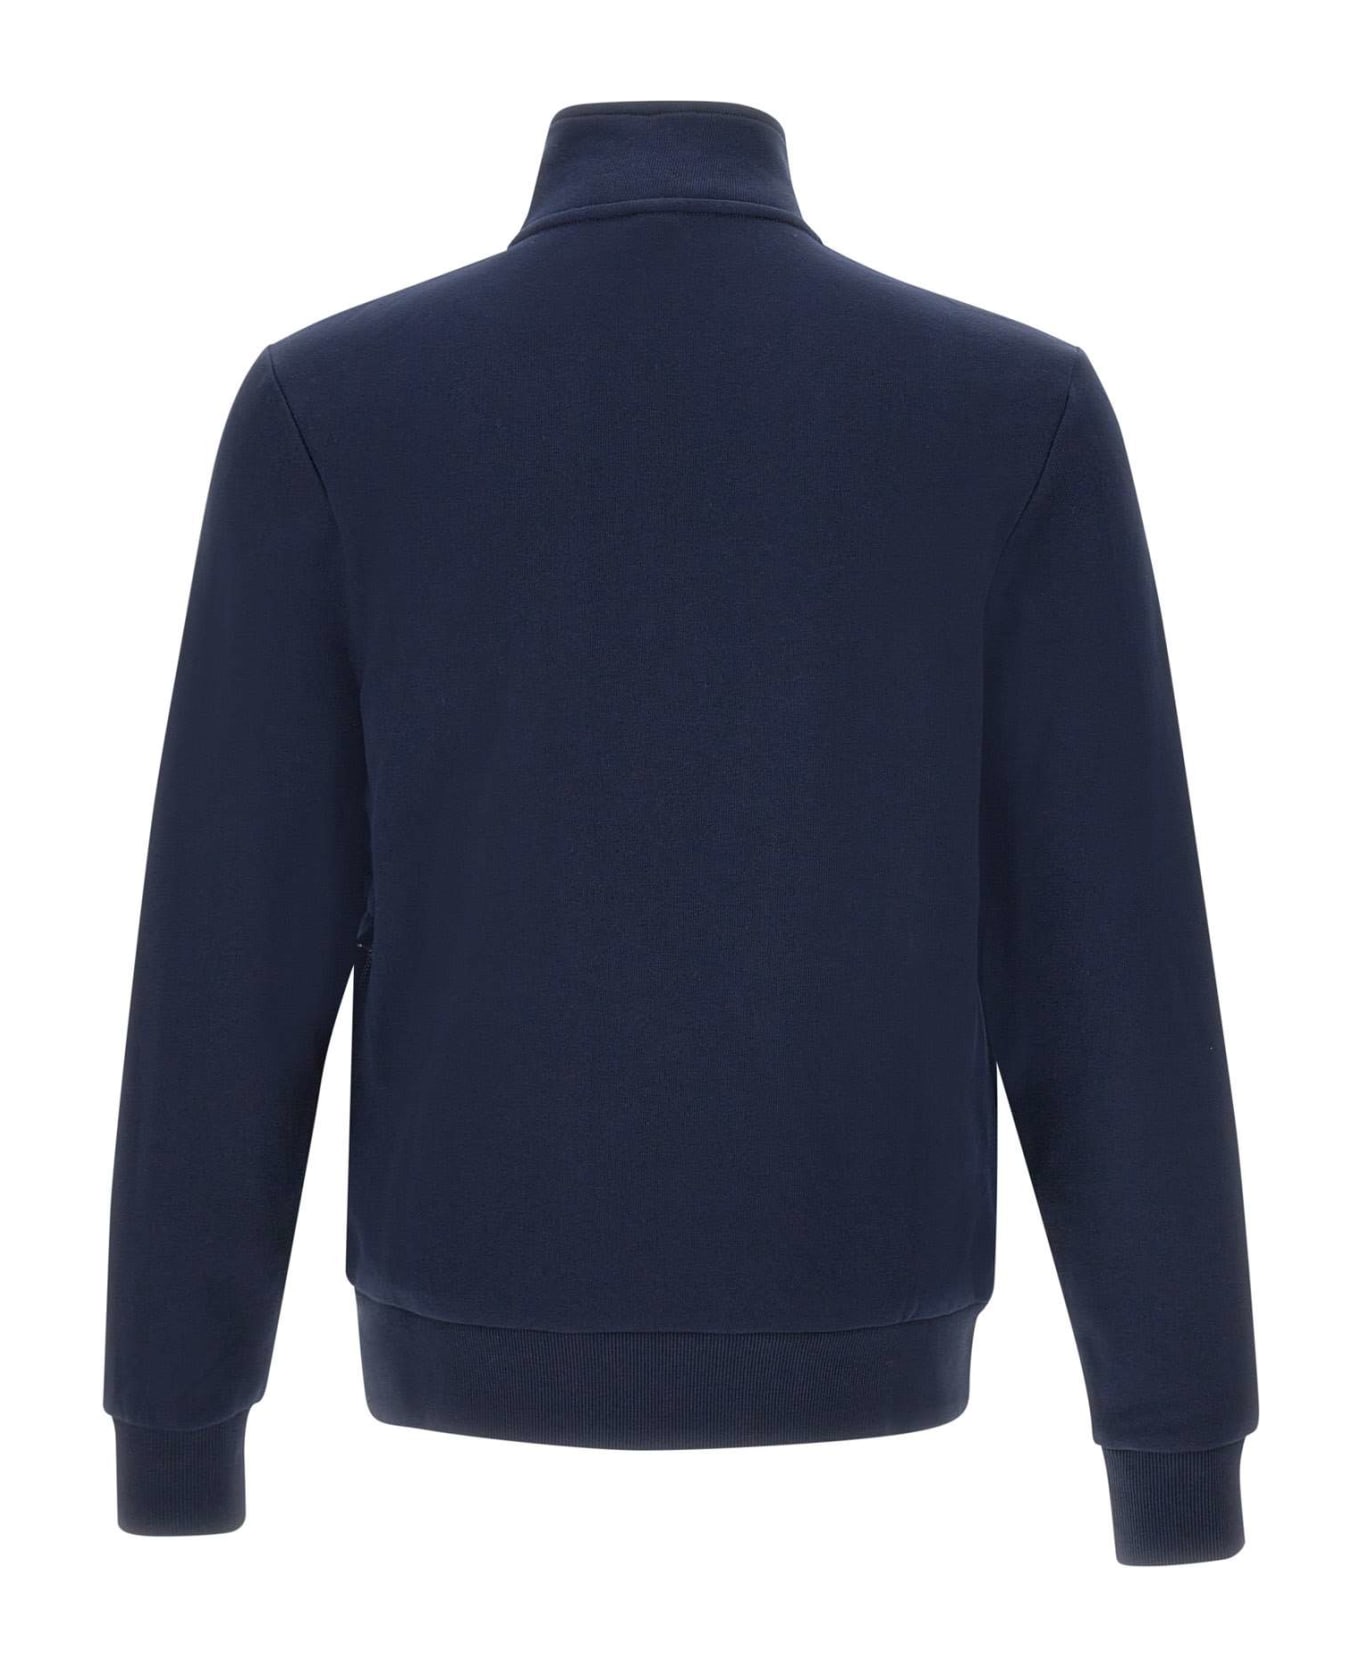 Sun 68 Cotton Sweatshirt Fleece - NAVY BLUE フリース